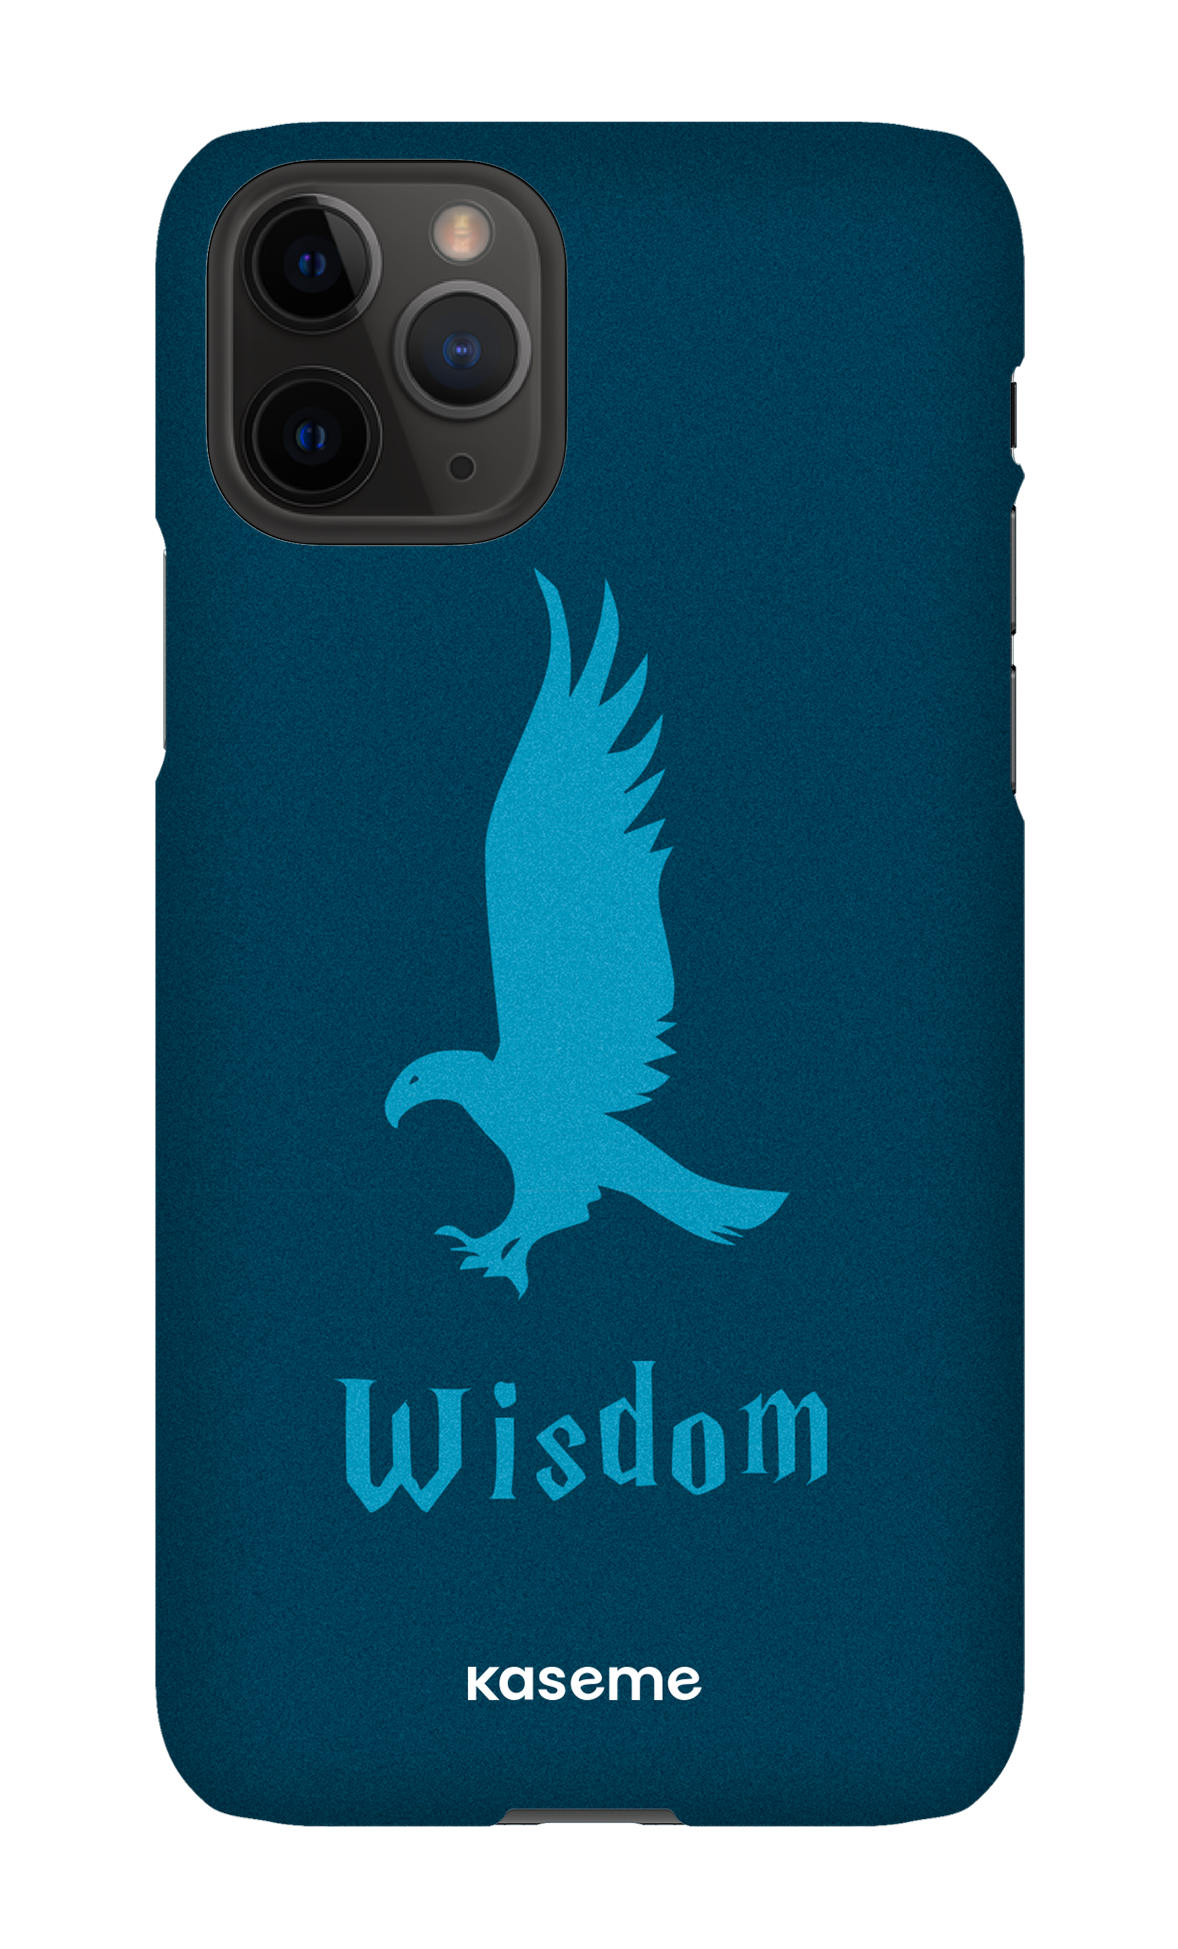 Wisdom - iPhone 11 Pro